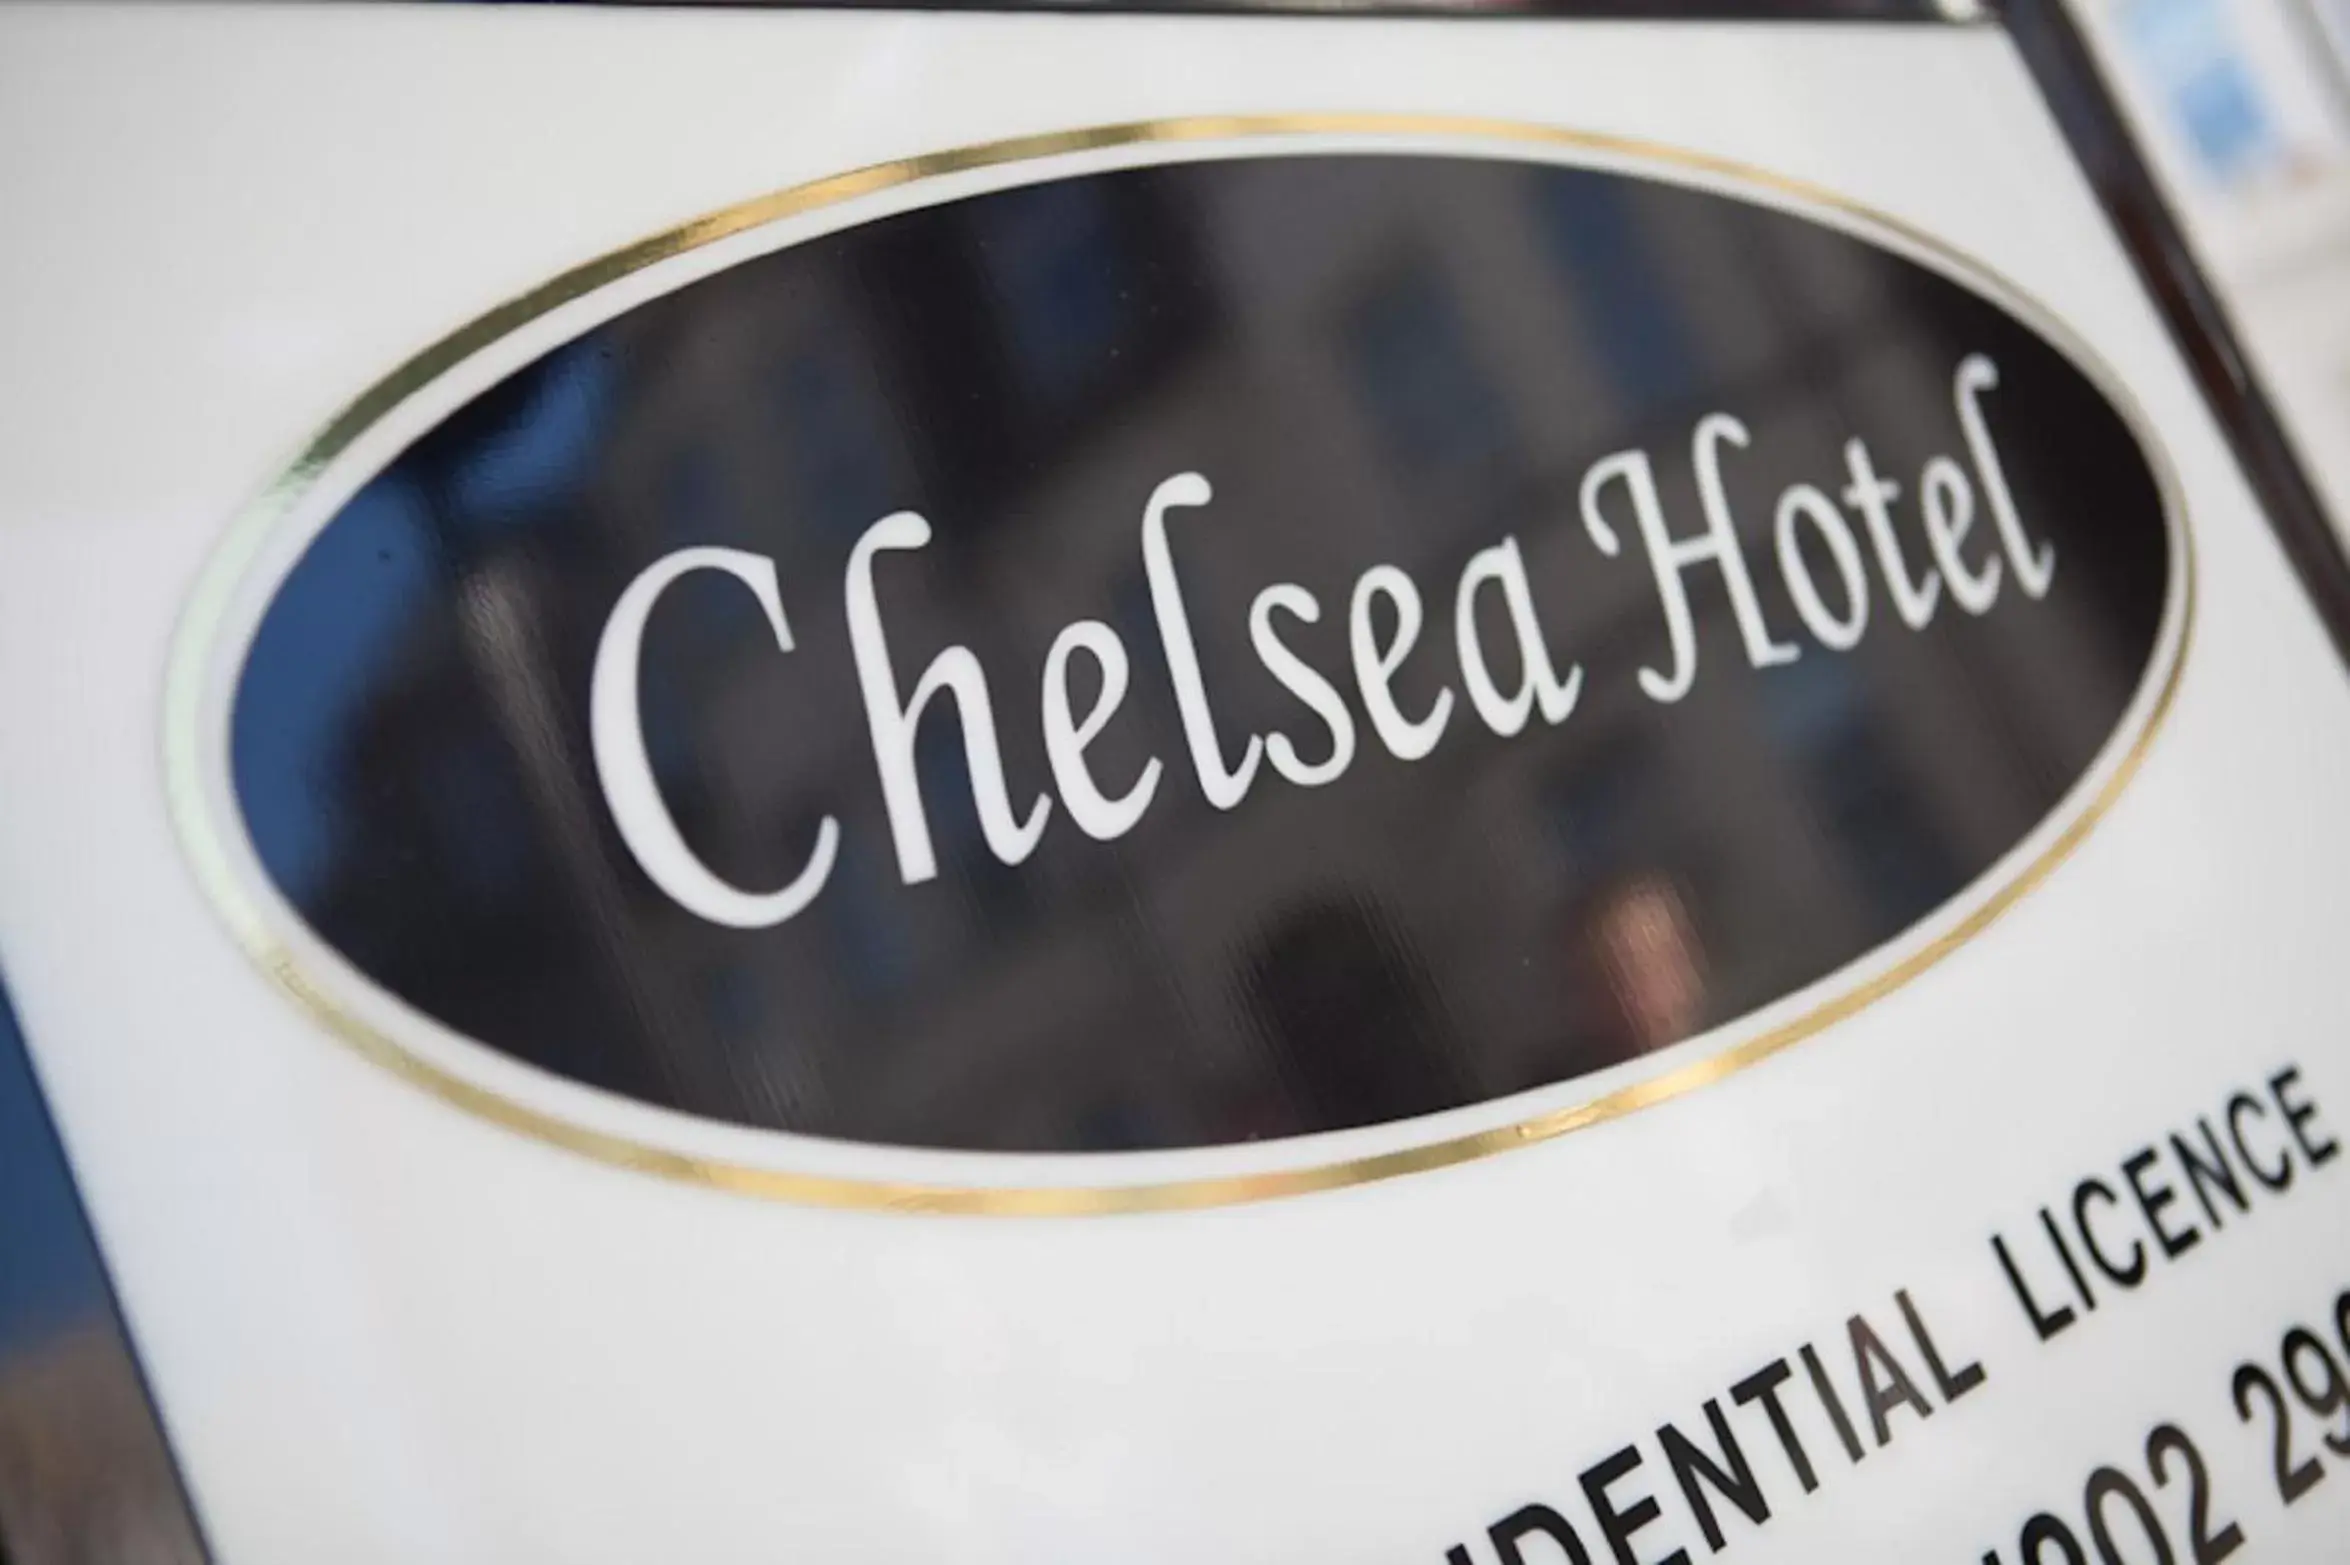 Property logo or sign, Property Logo/Sign in Chelsea Hotel